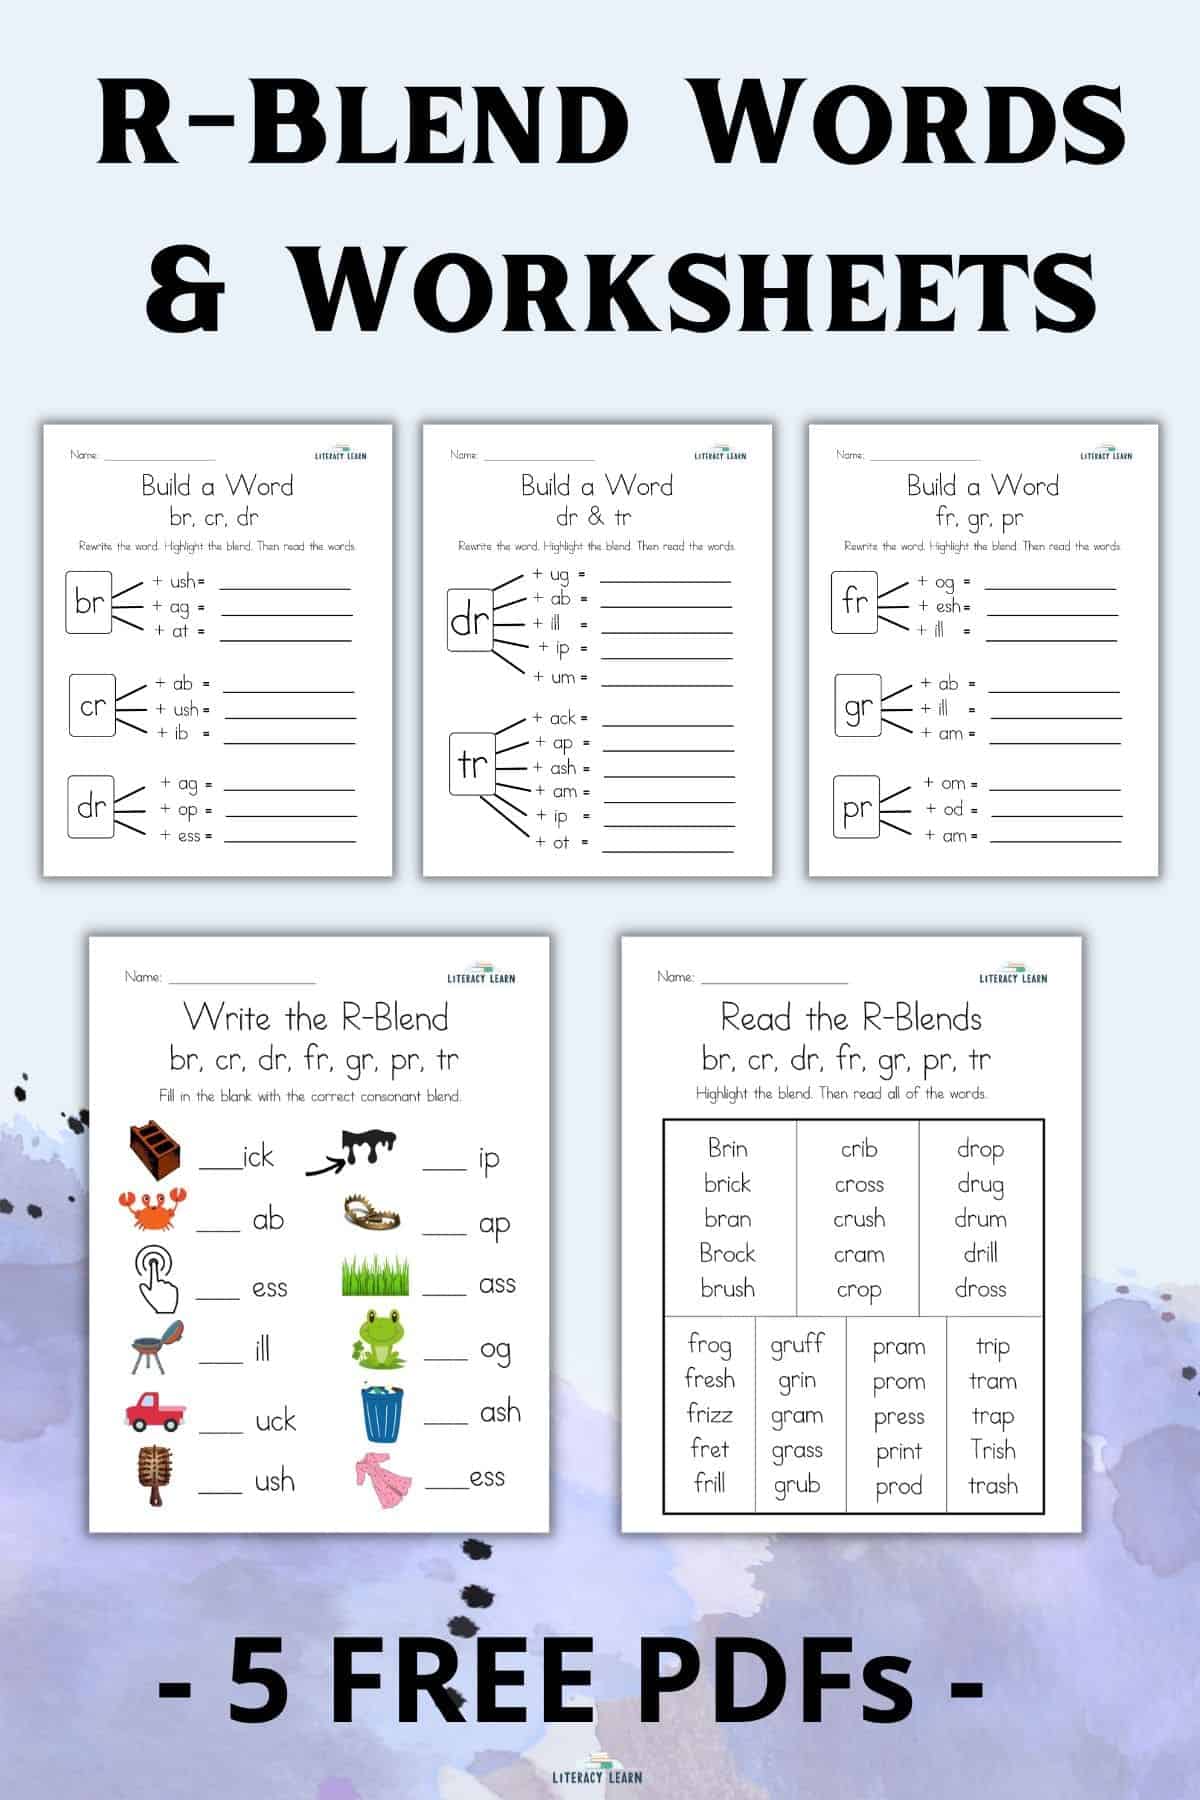 Pinterest image stating "R-Blend Words and Worksheets" with five free sample r-blend worksheets.